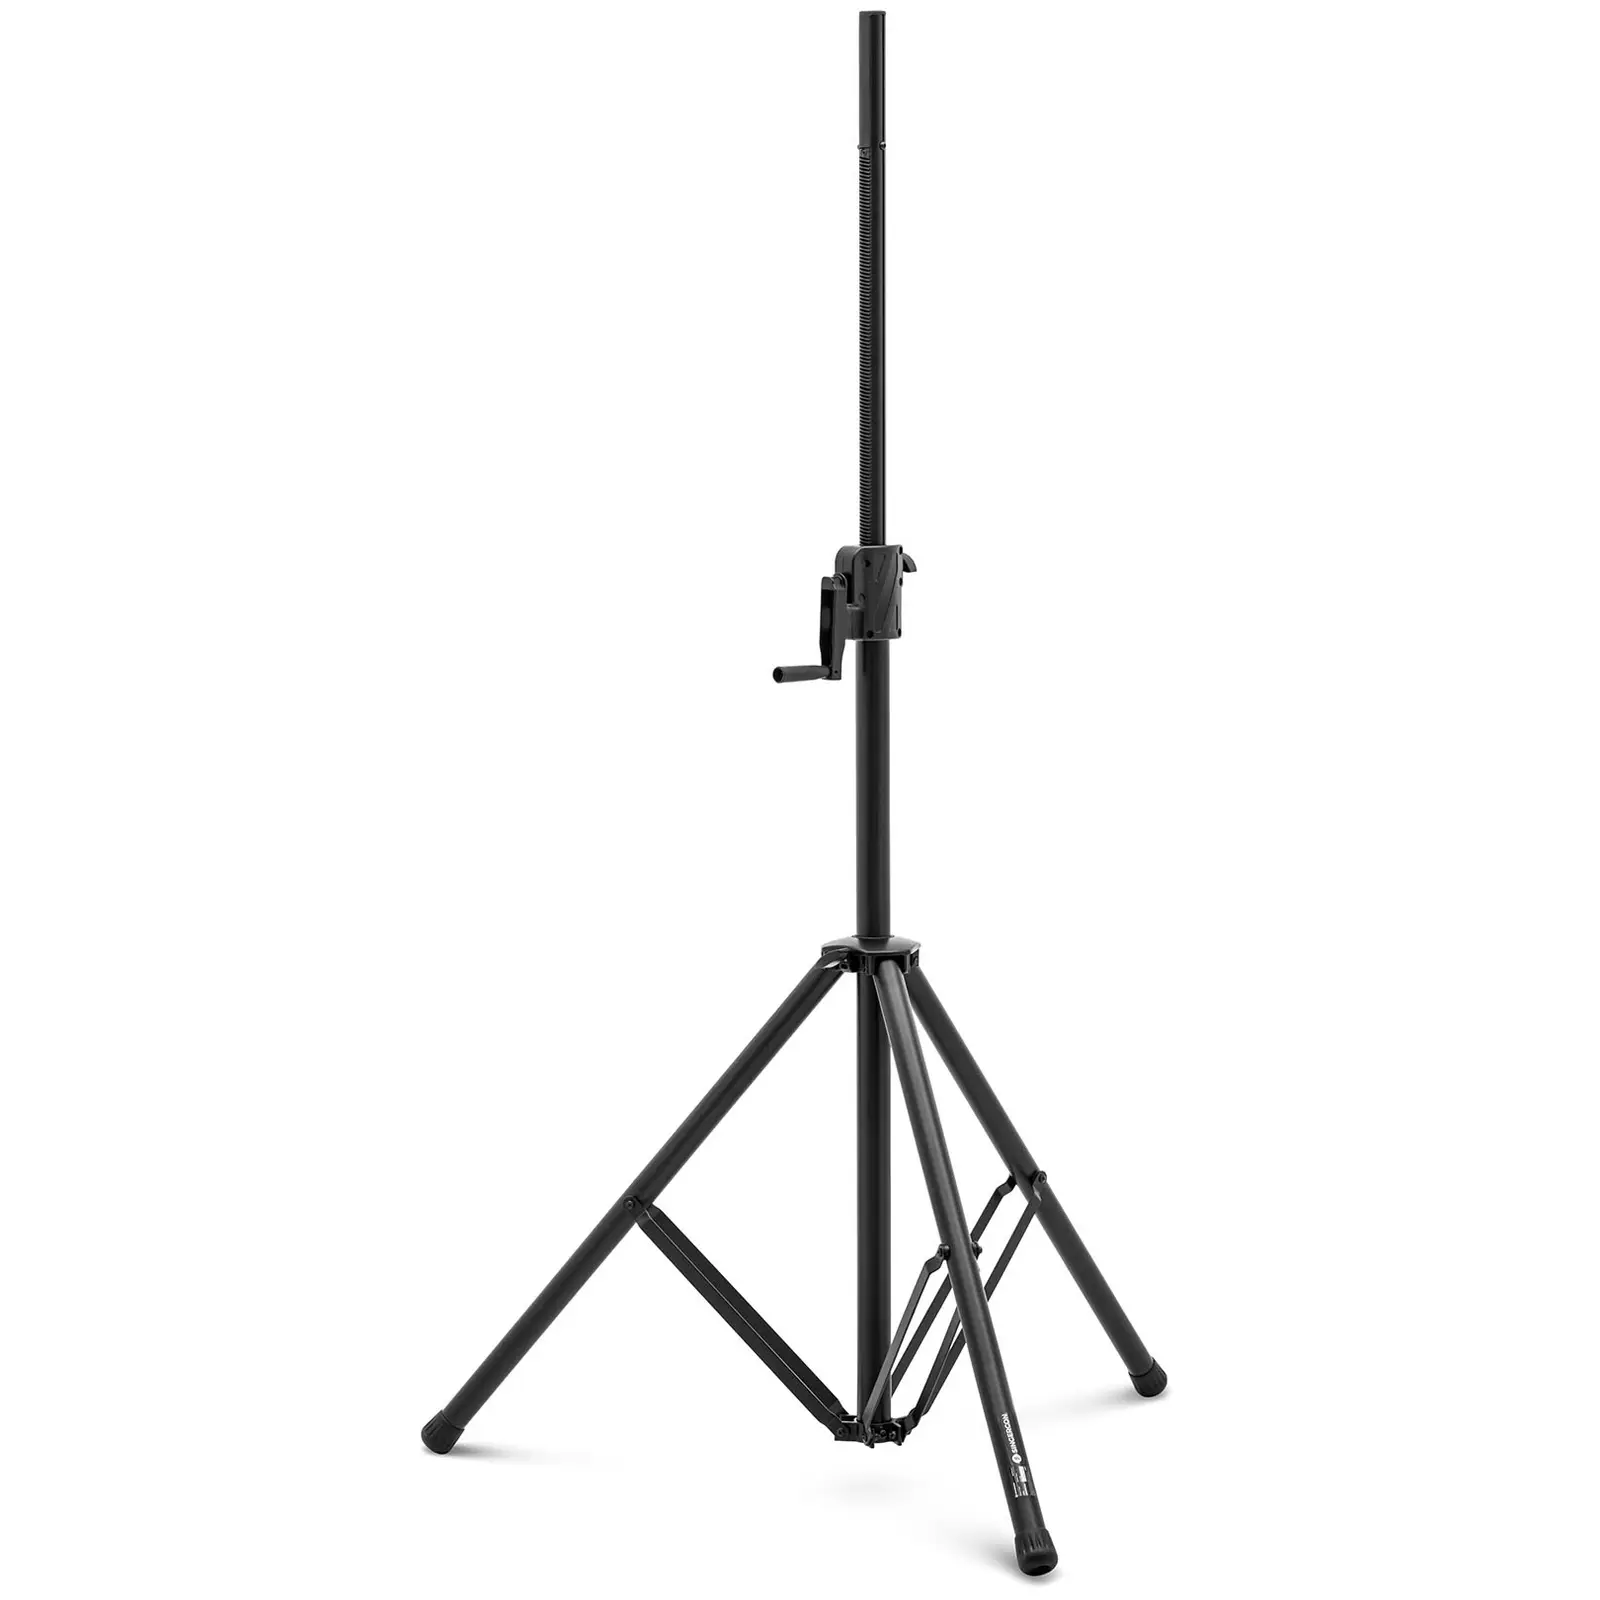 Podni stalak za zvučnike - za zvučnike i rasvjetu - sklopiv - do 70 kg - 1450 - 2200 mm - aluminij